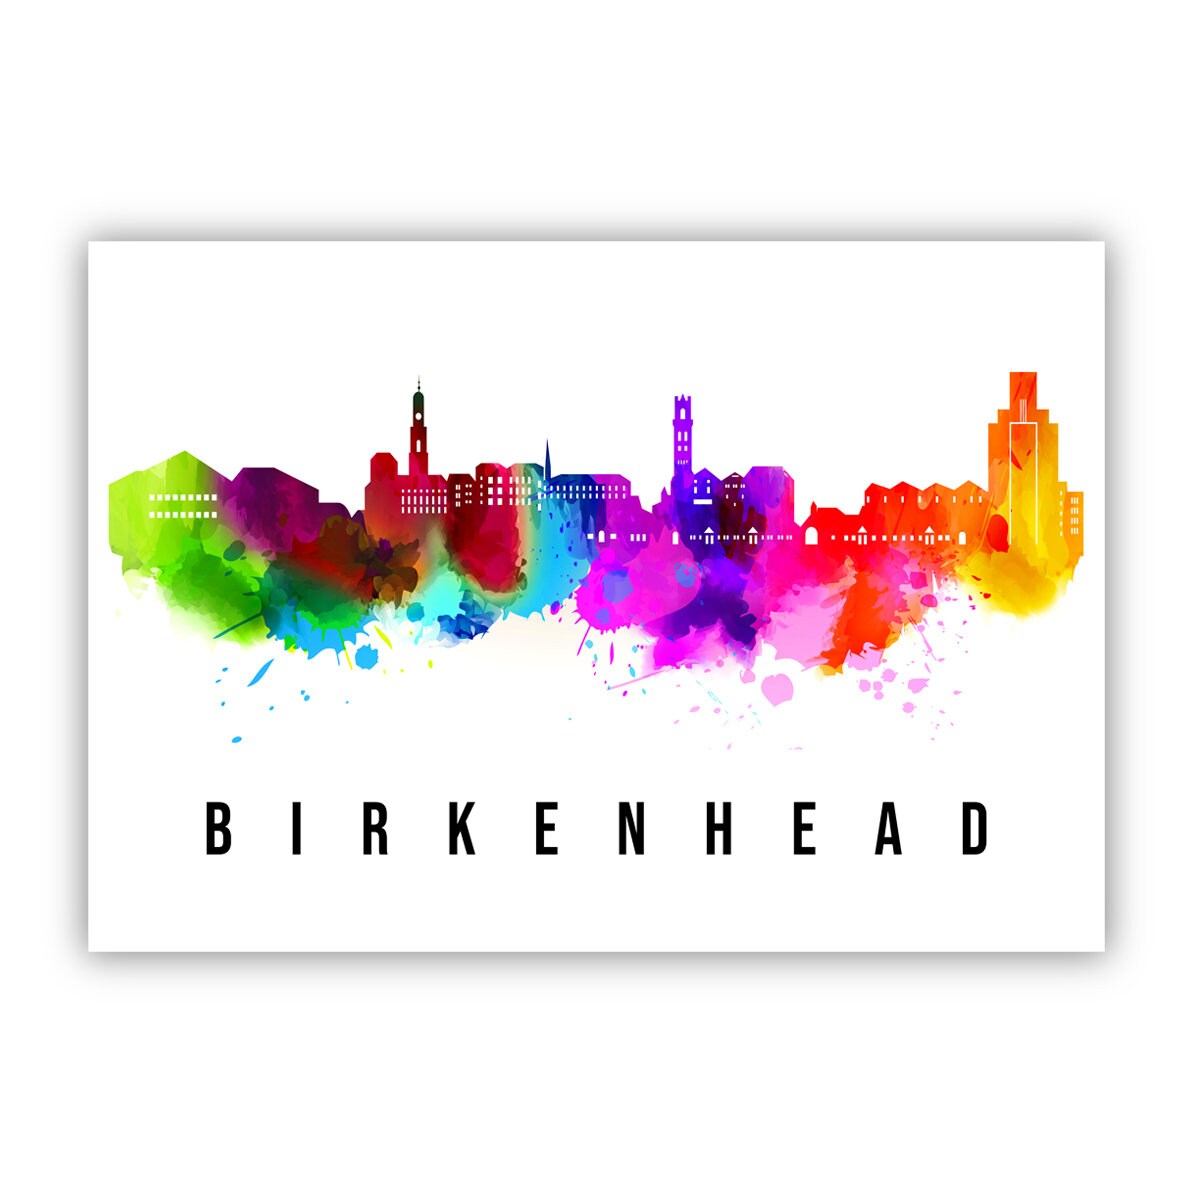 Birkenhead England Poster, Skyline poster cityscape poster, Landmark City Illustration poster, Home wall decoration, Office wall art